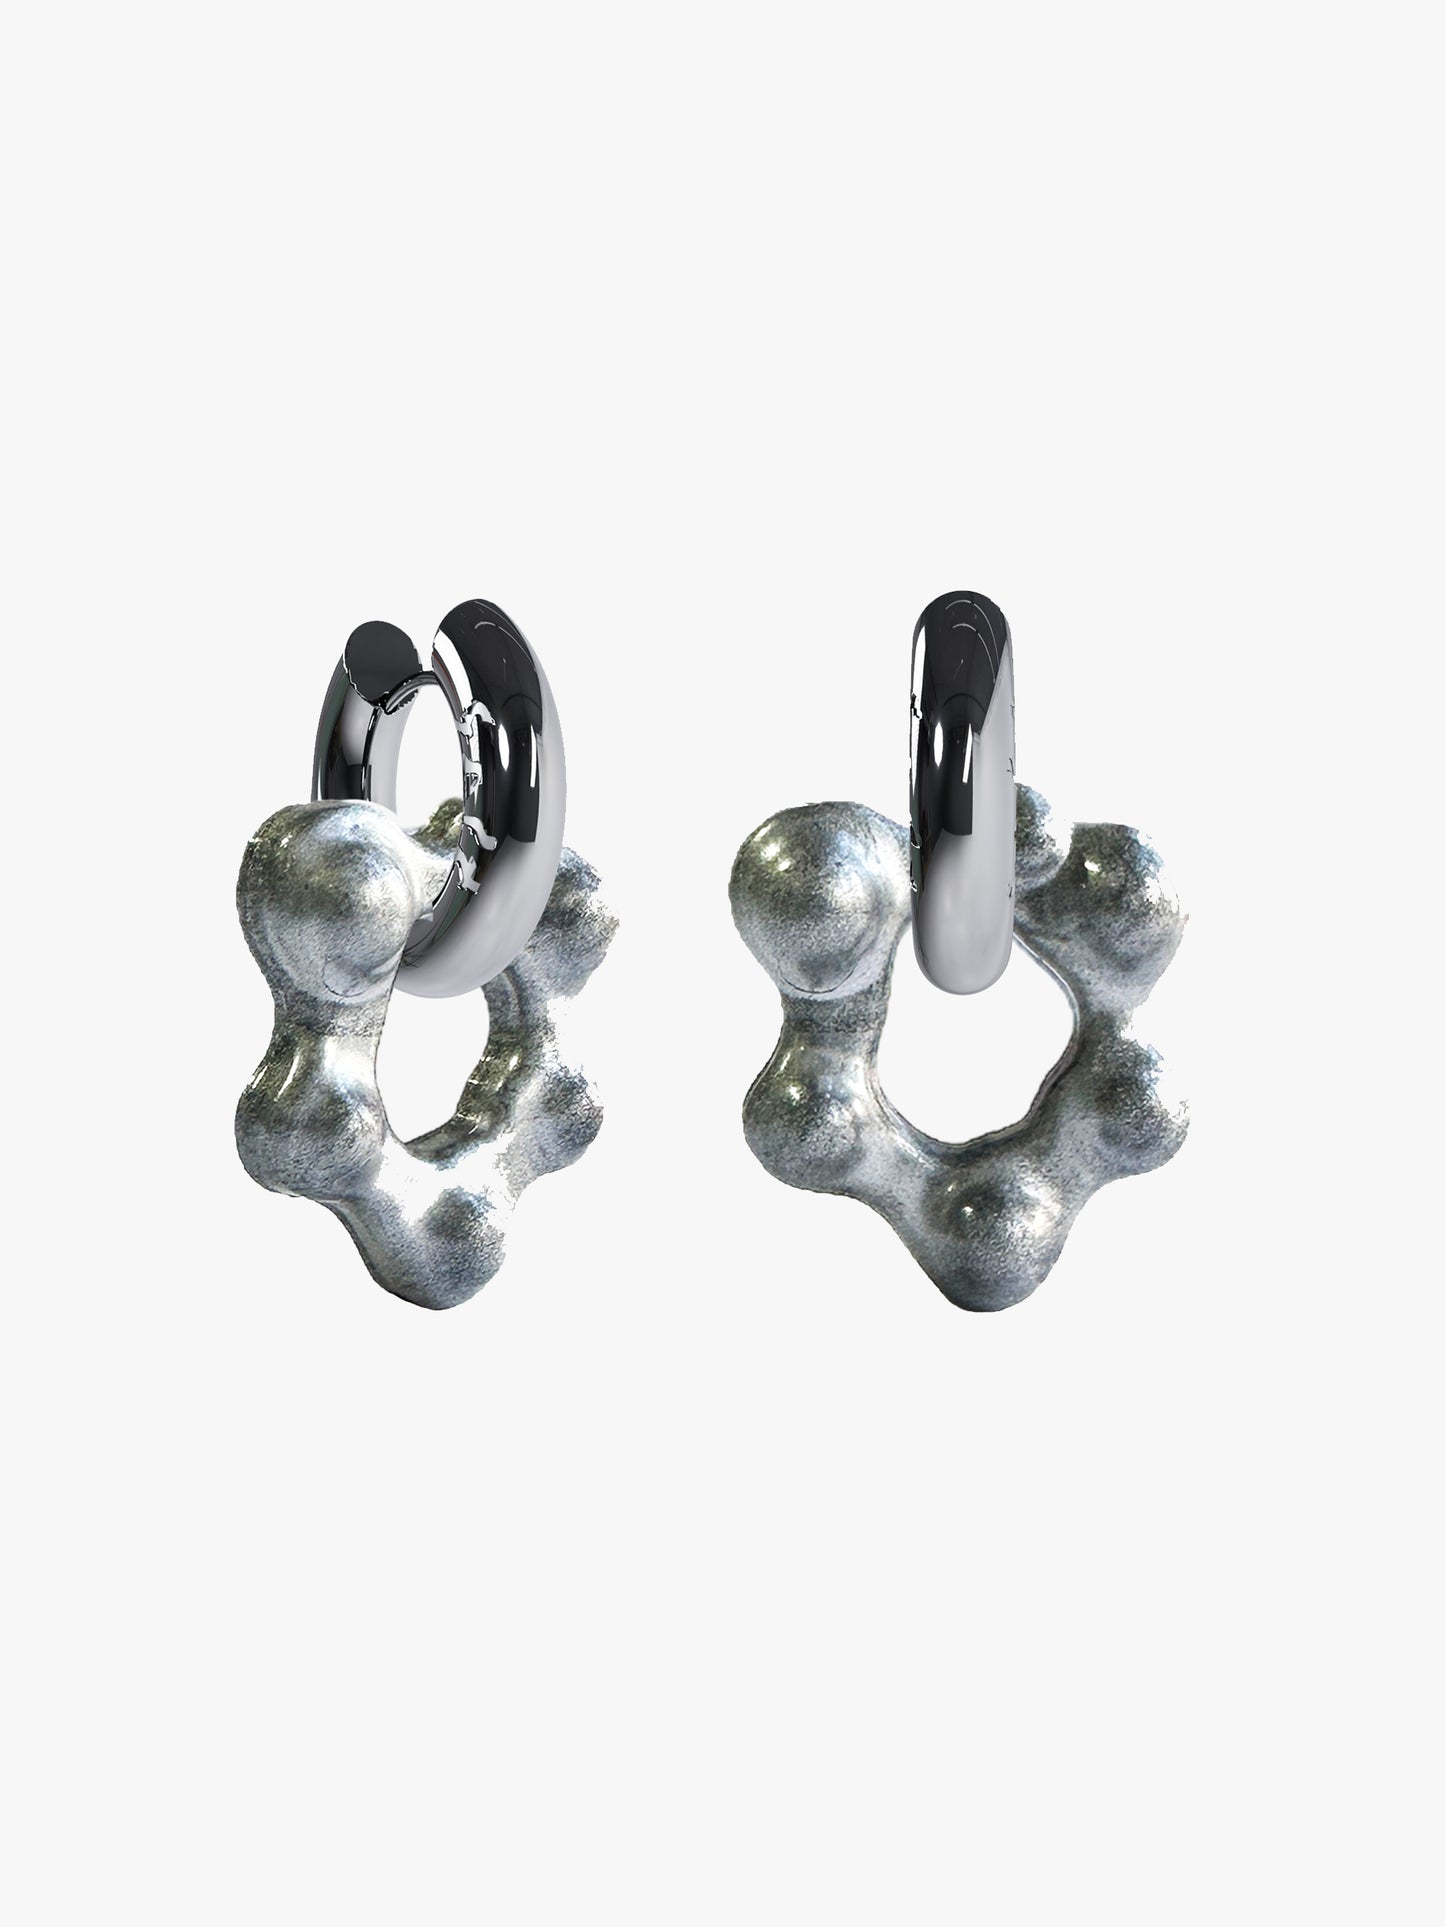 Oyo Chrome silver earring (pair)